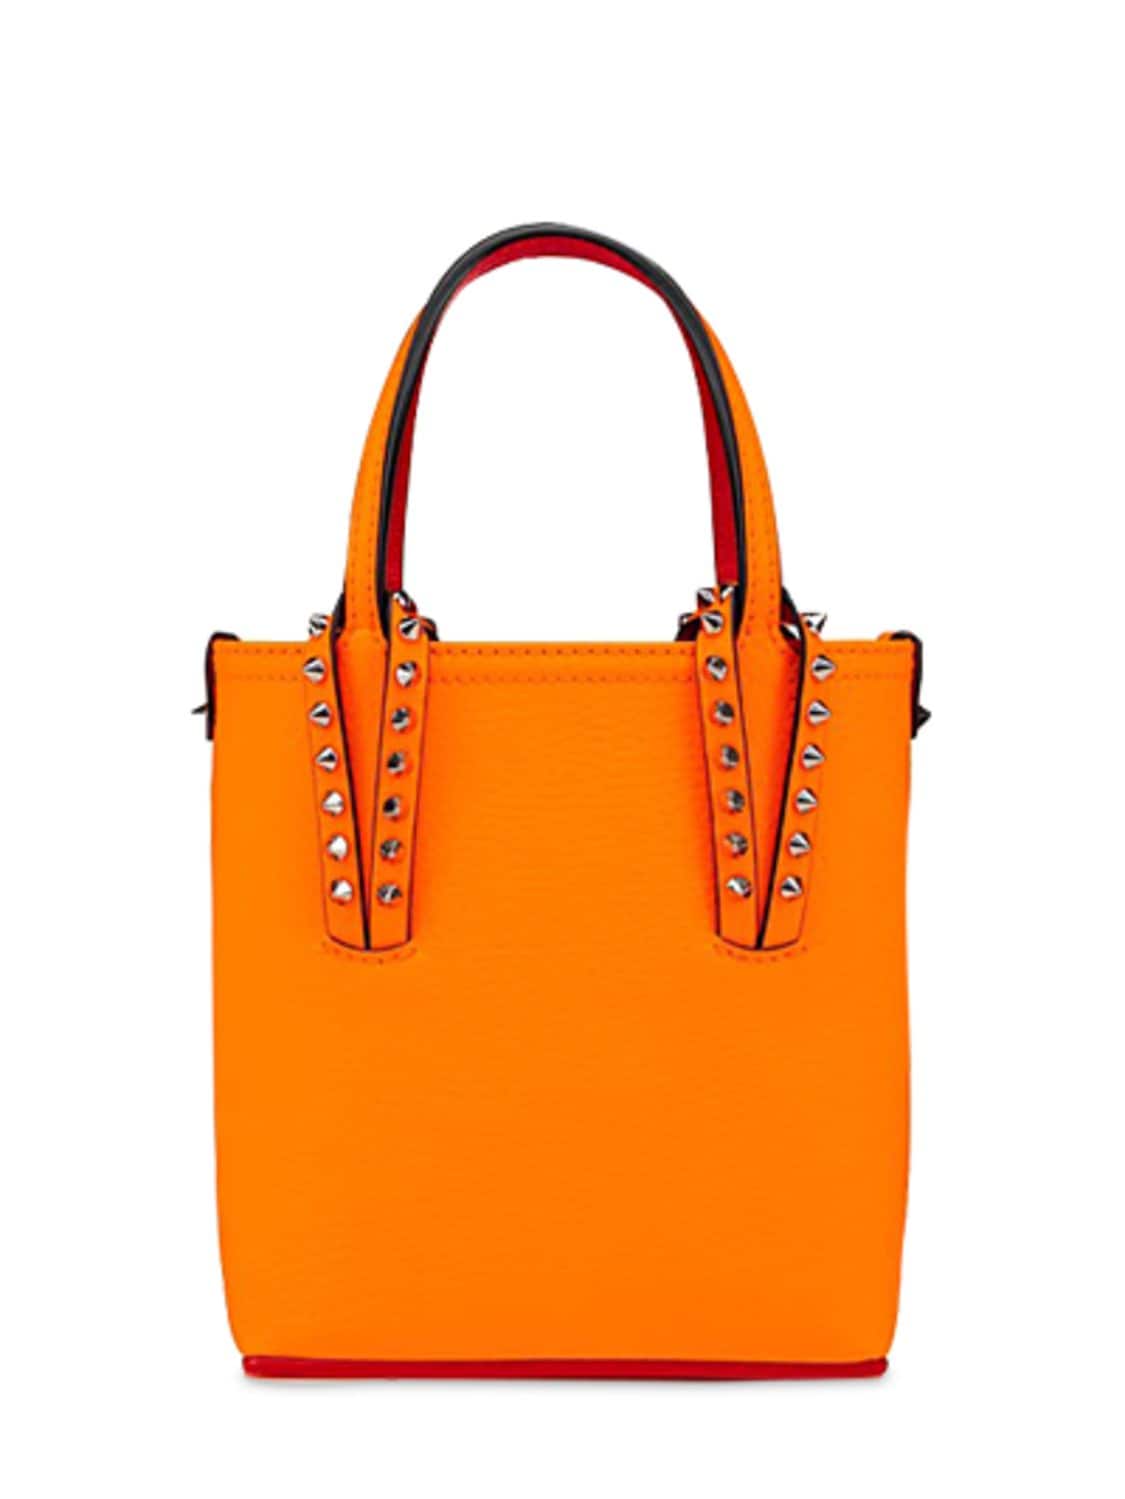 Cabata n/s mini leather tote bag - Christian Louboutin - Women